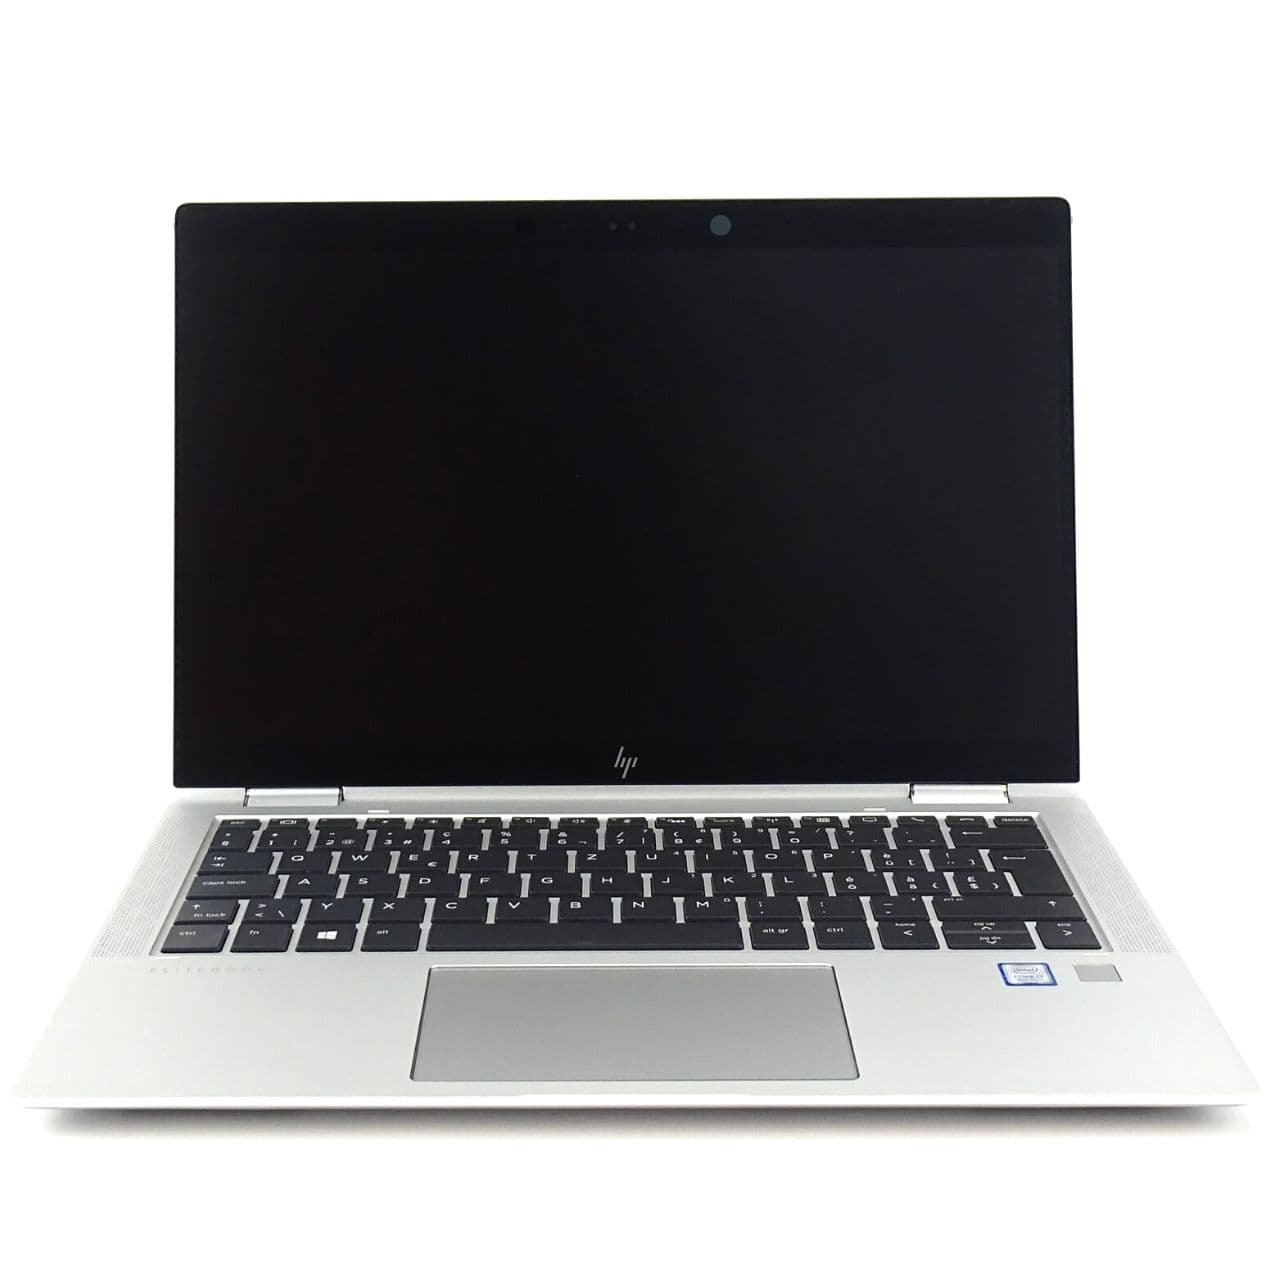 HP EliteBook x360 1030 G3 

 - 13,3 Zoll - Intel Core i5 8250U @ 1,6 GHz - 8 GB - 256 GB SSD - 1920 x 1080 FHD - Touchscreen - Windows 10 Professional - Sehr gut